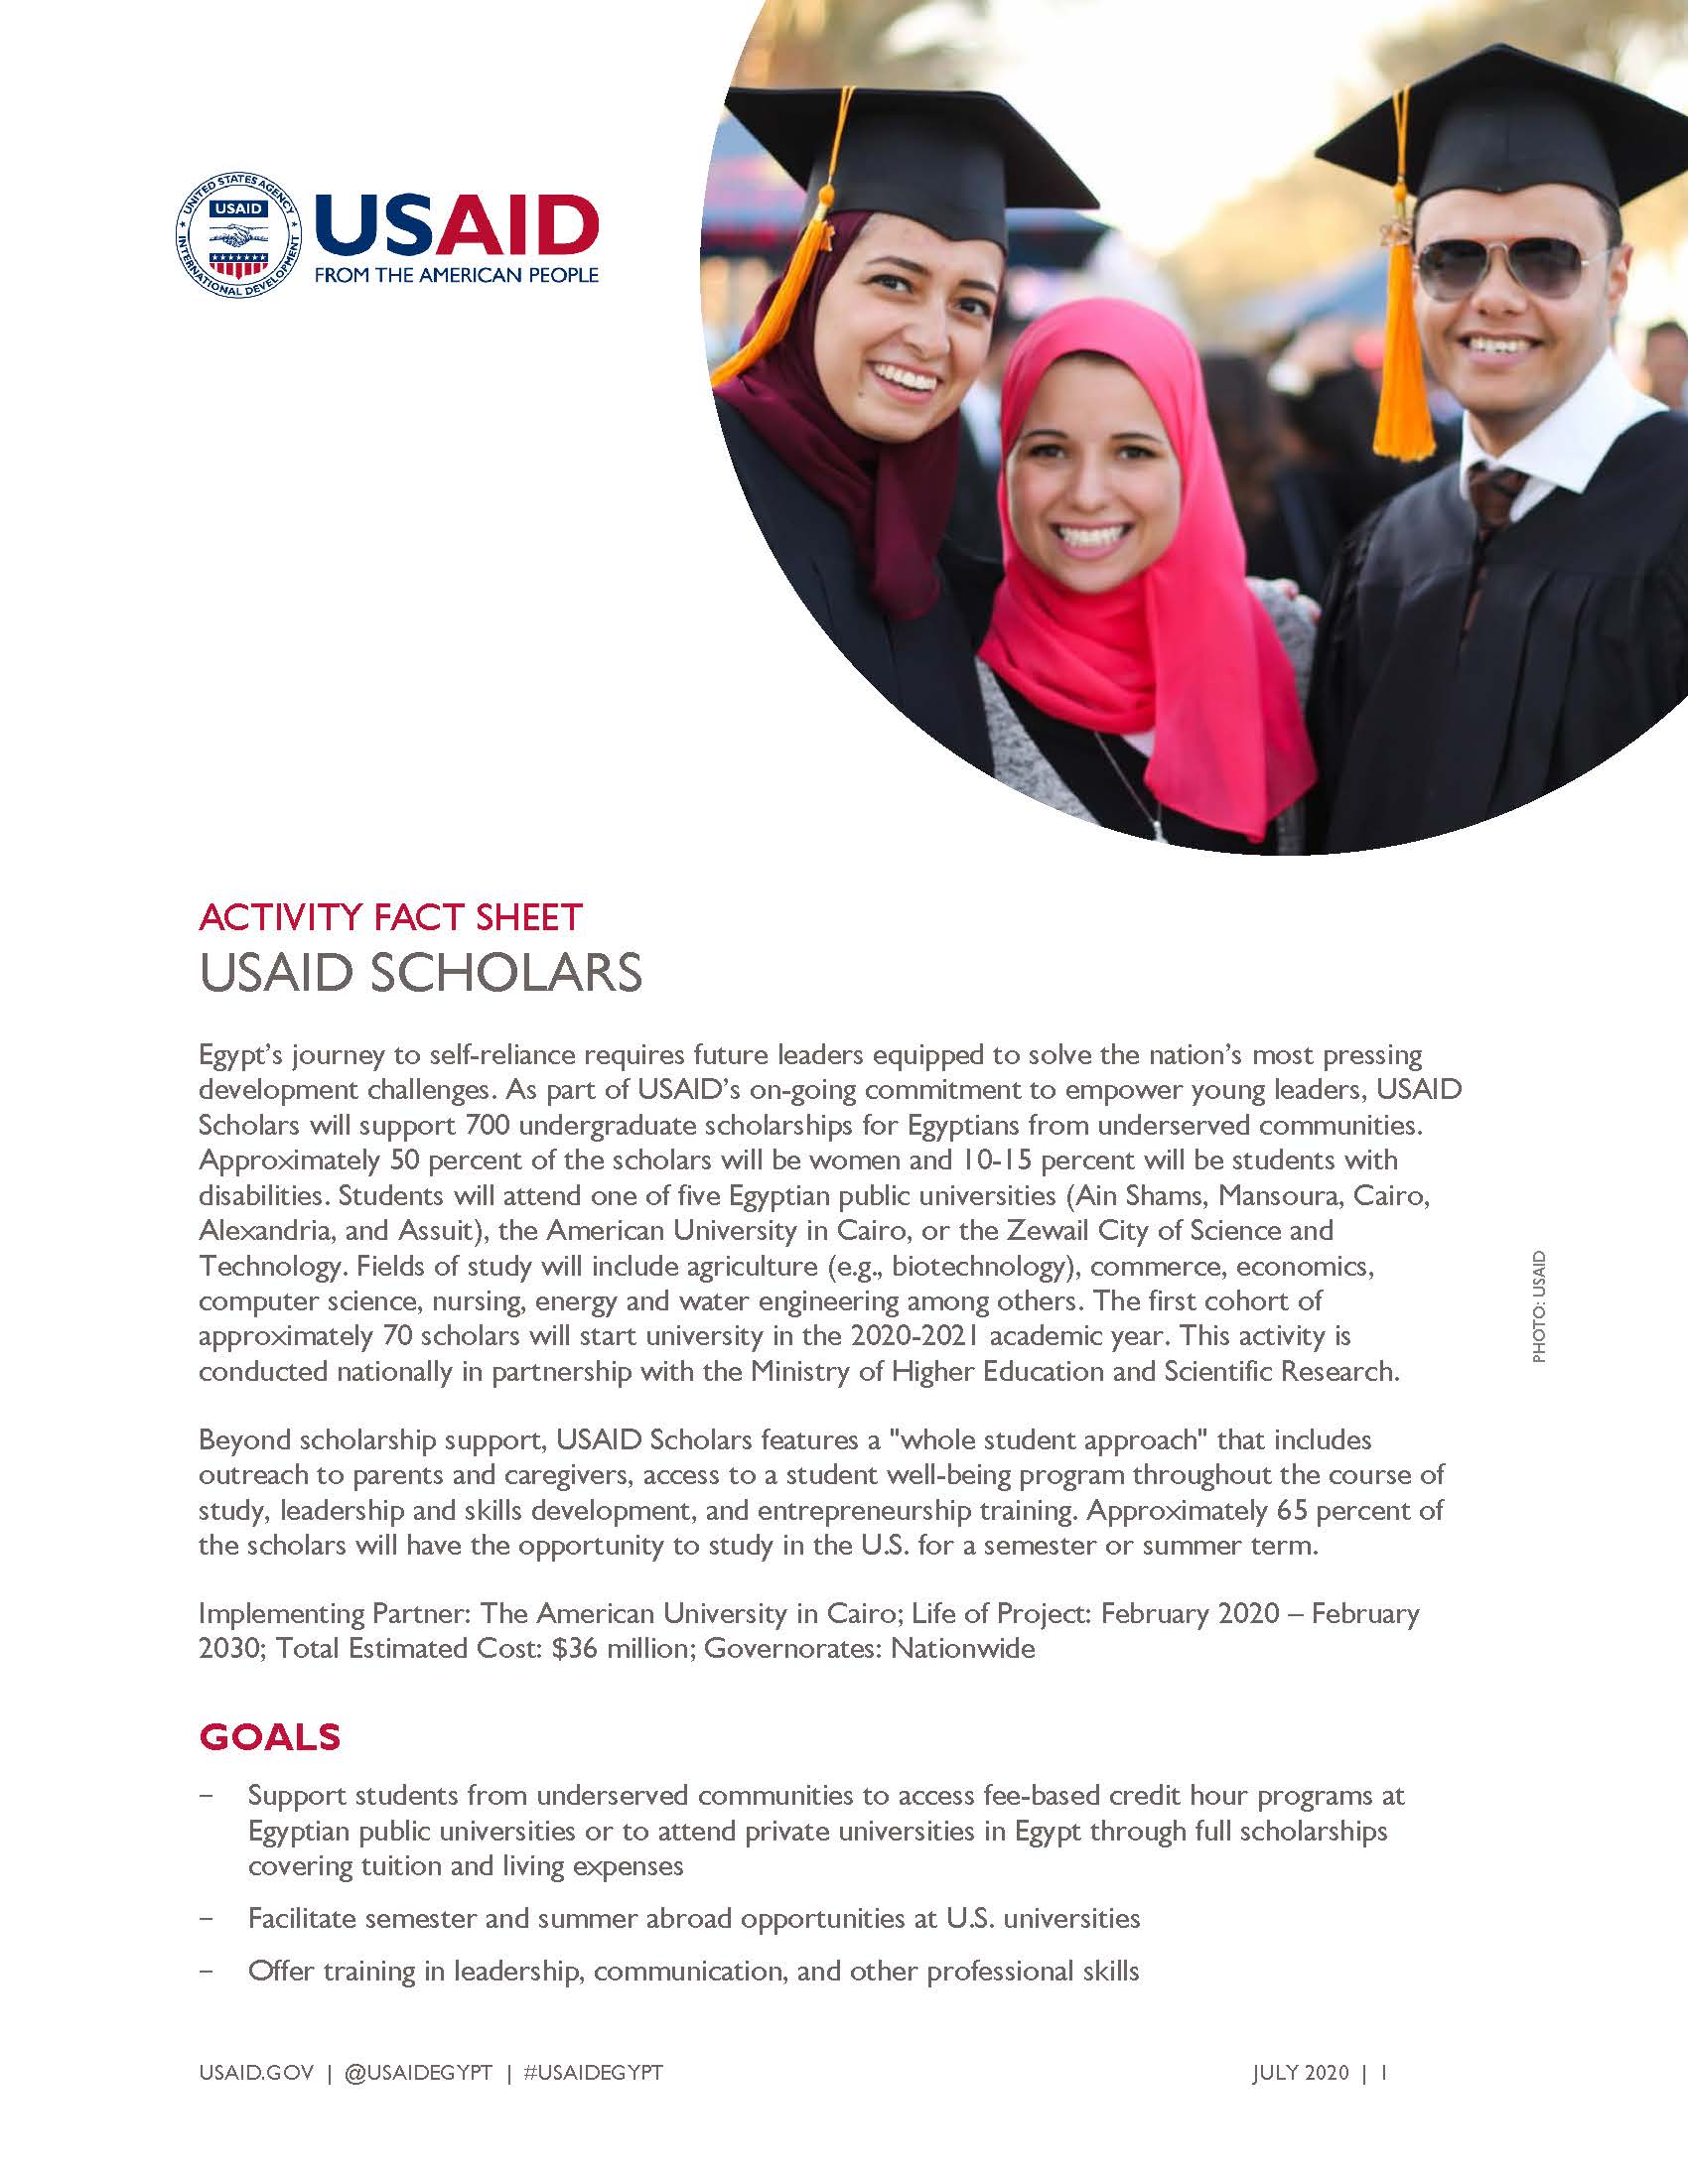 USAID/Egypt Activity Fact Sheet: USAID Scholars